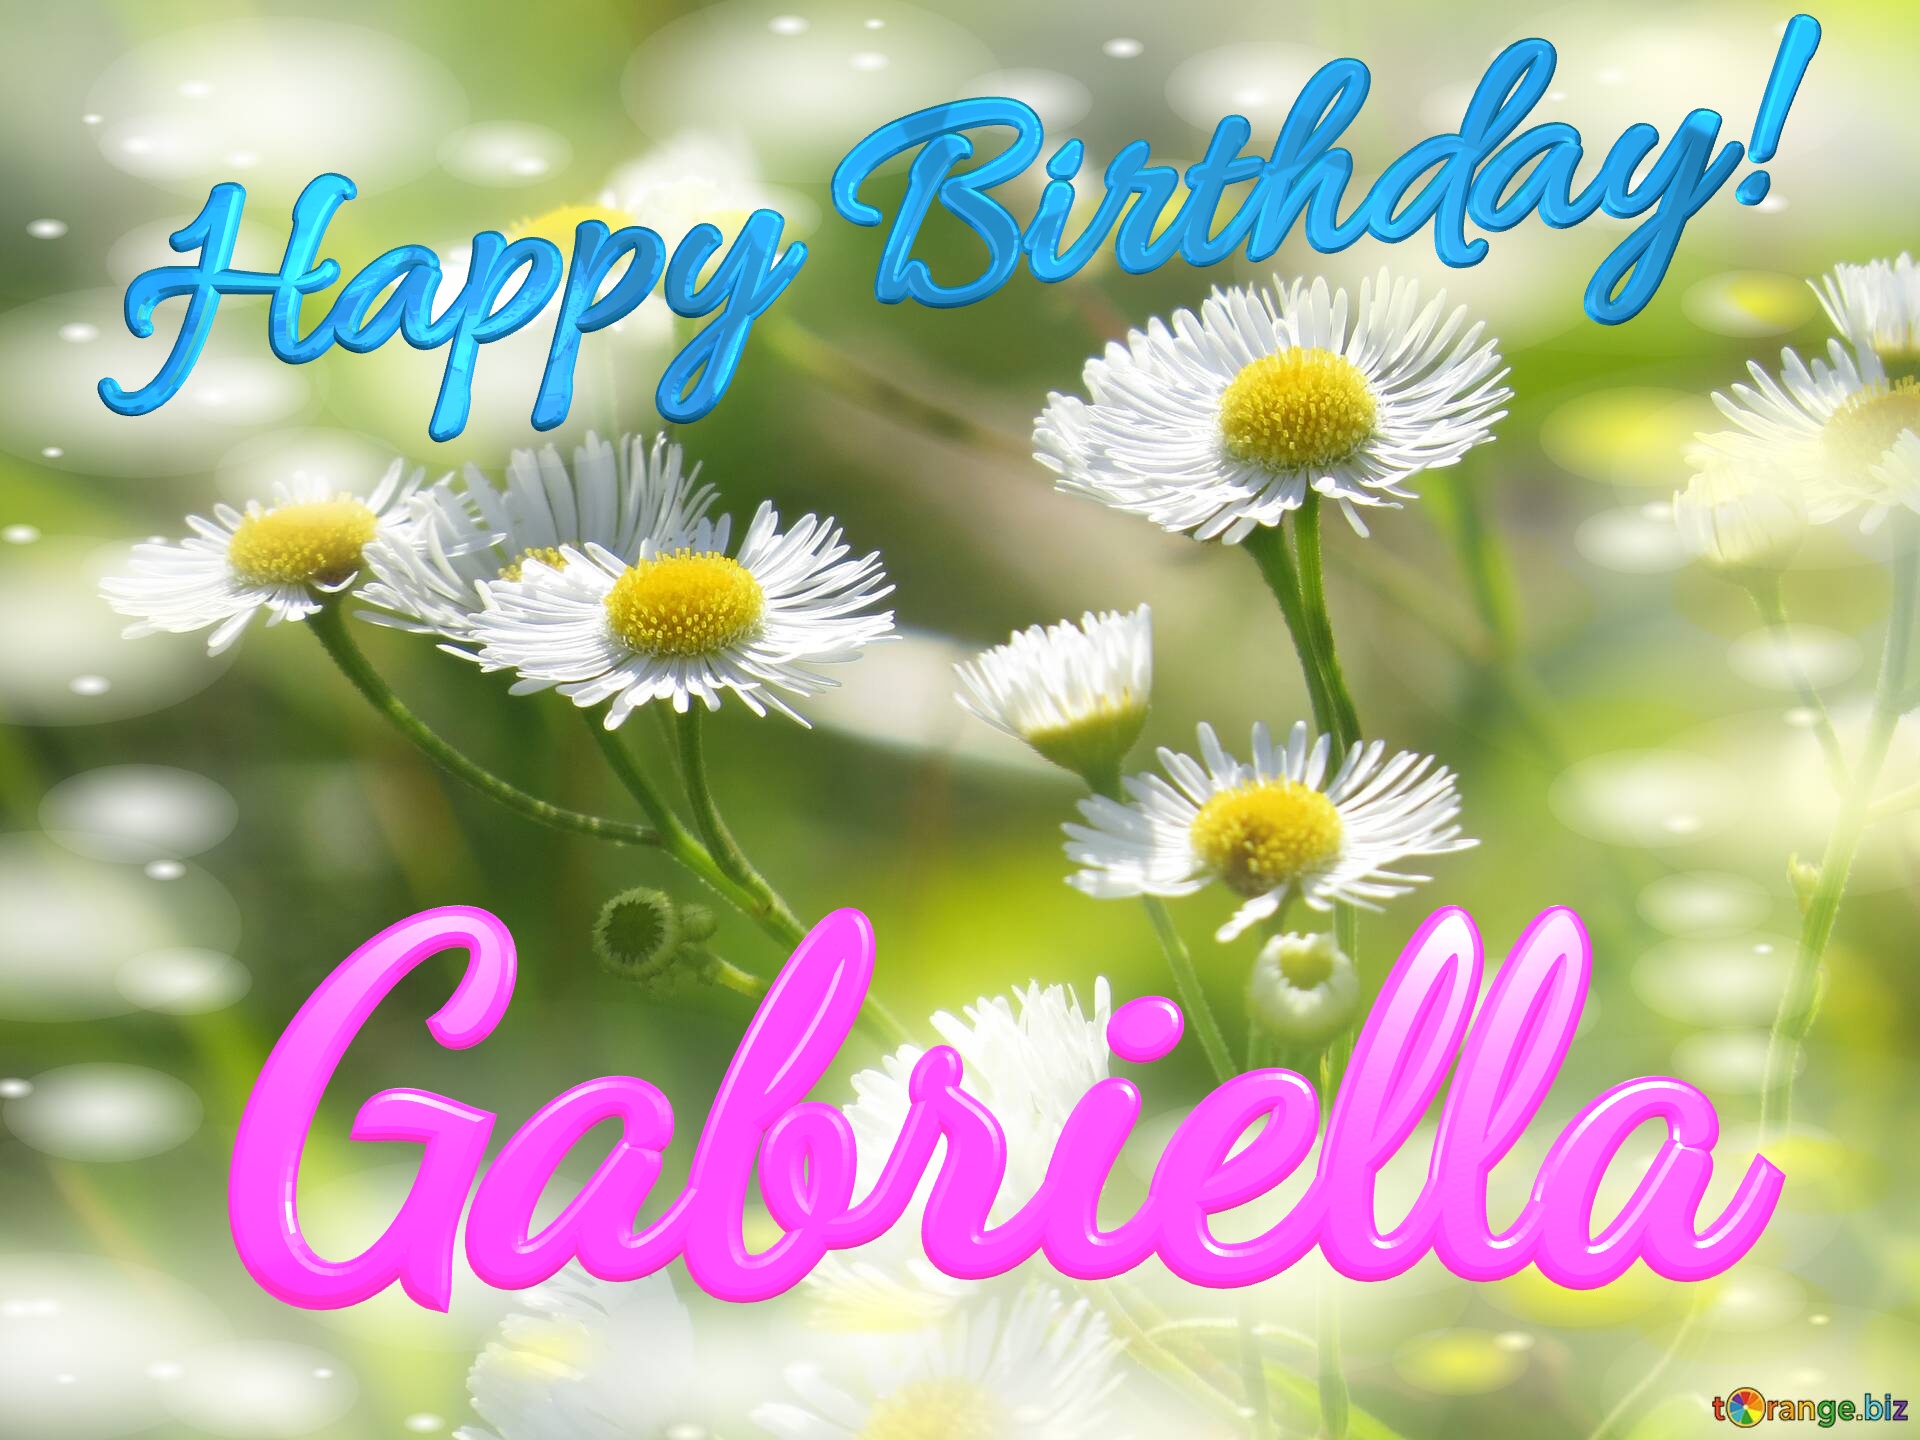 Gabriella Happy Birthday! Daisies bokeh background №0